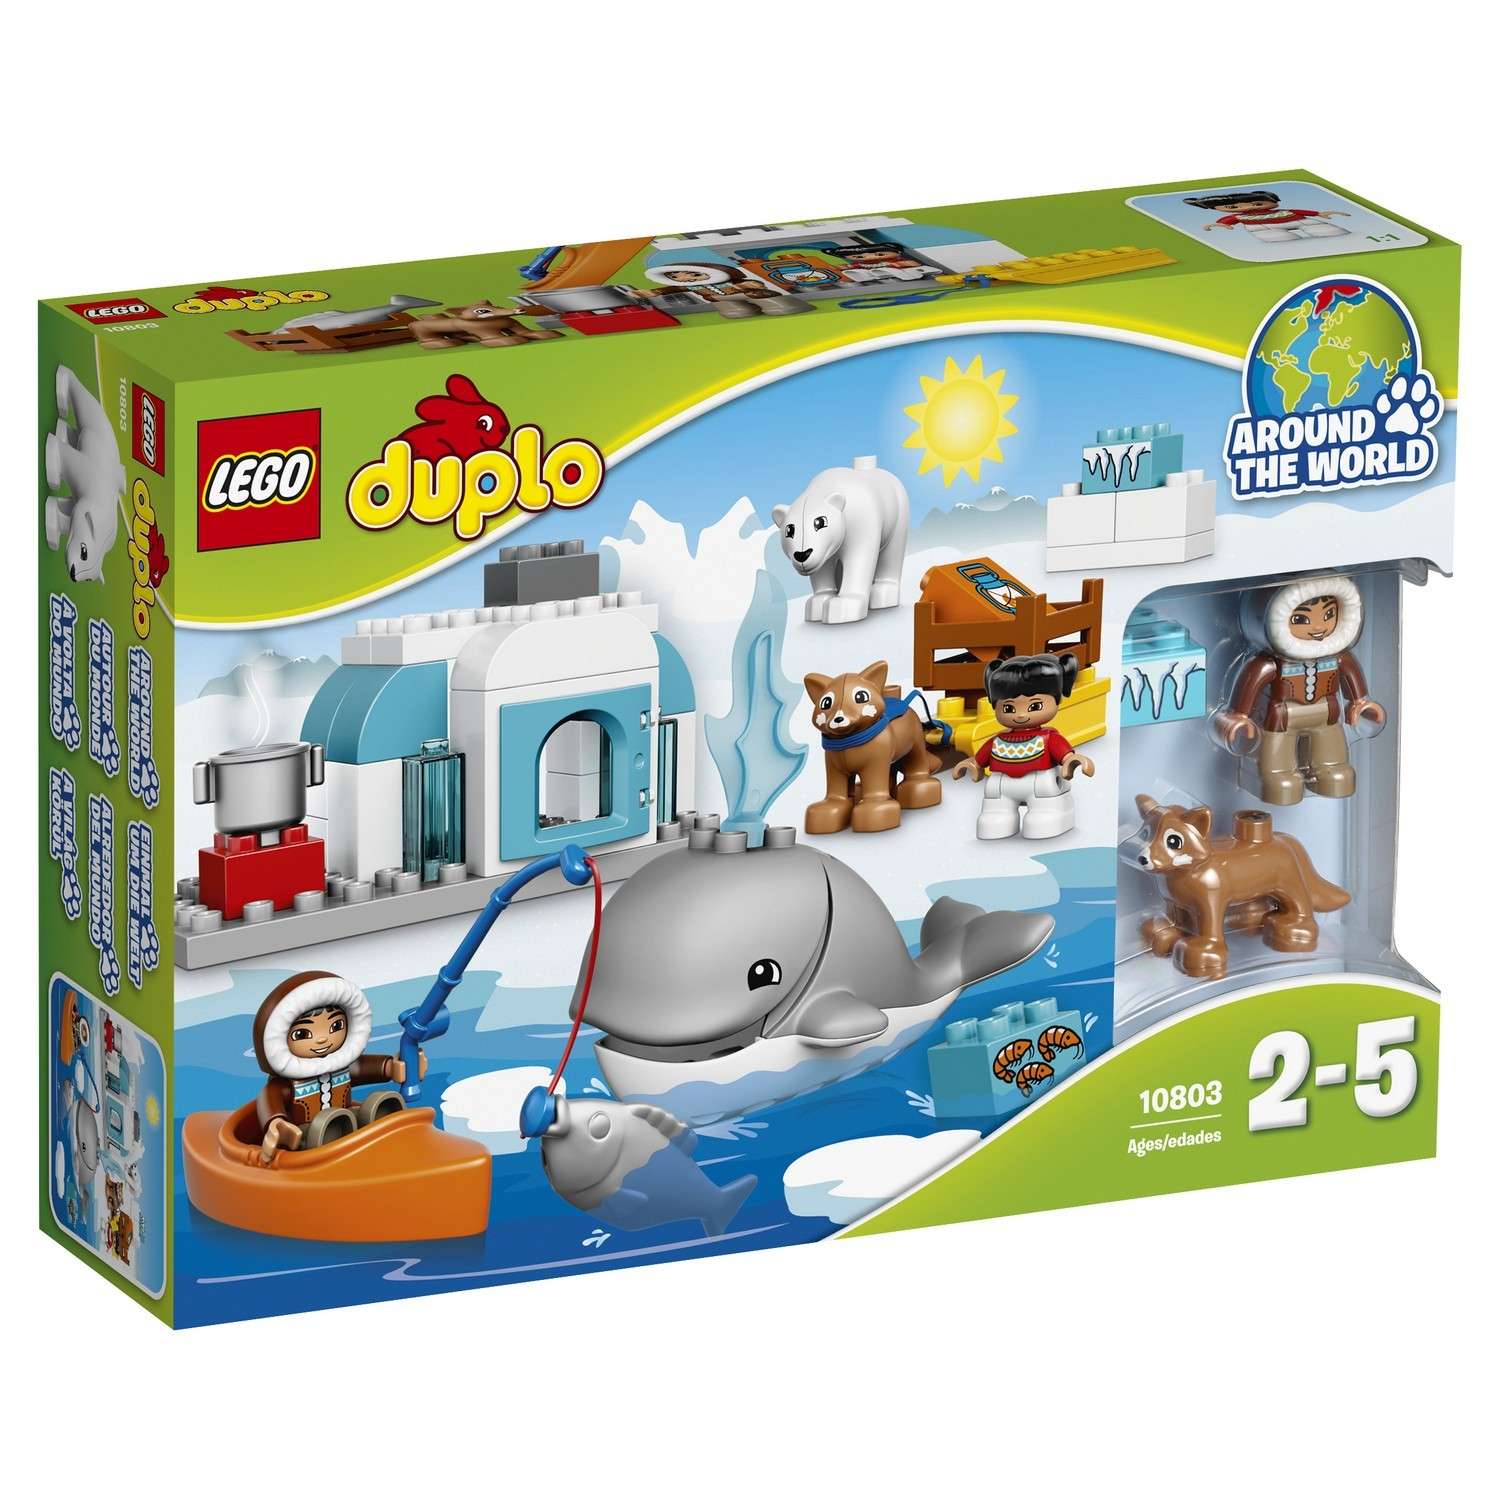 Конструктор LEGO DUPLO Town Вокруг света: Арктика (10803) - фото 2